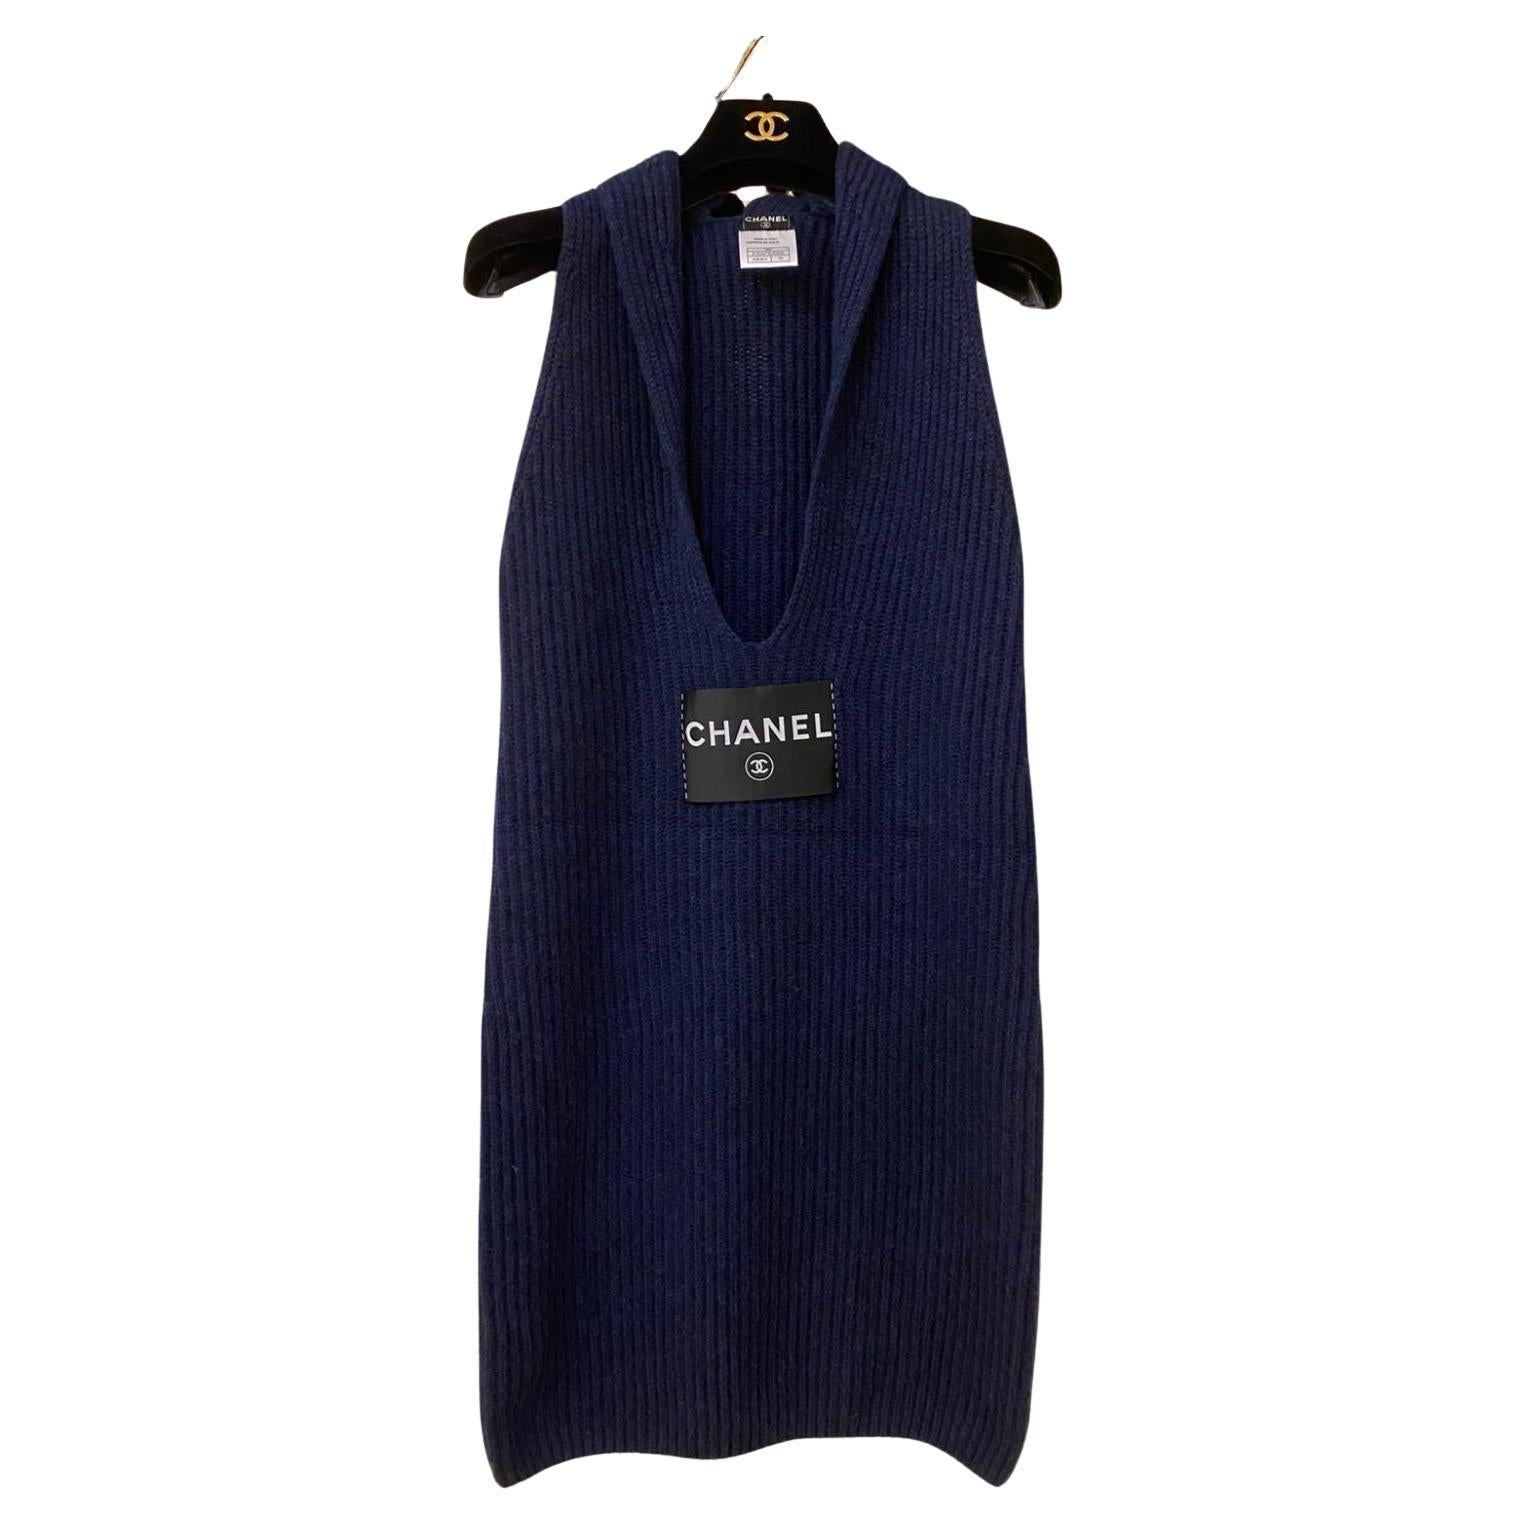 Robe bleu marine avec logo Chanel